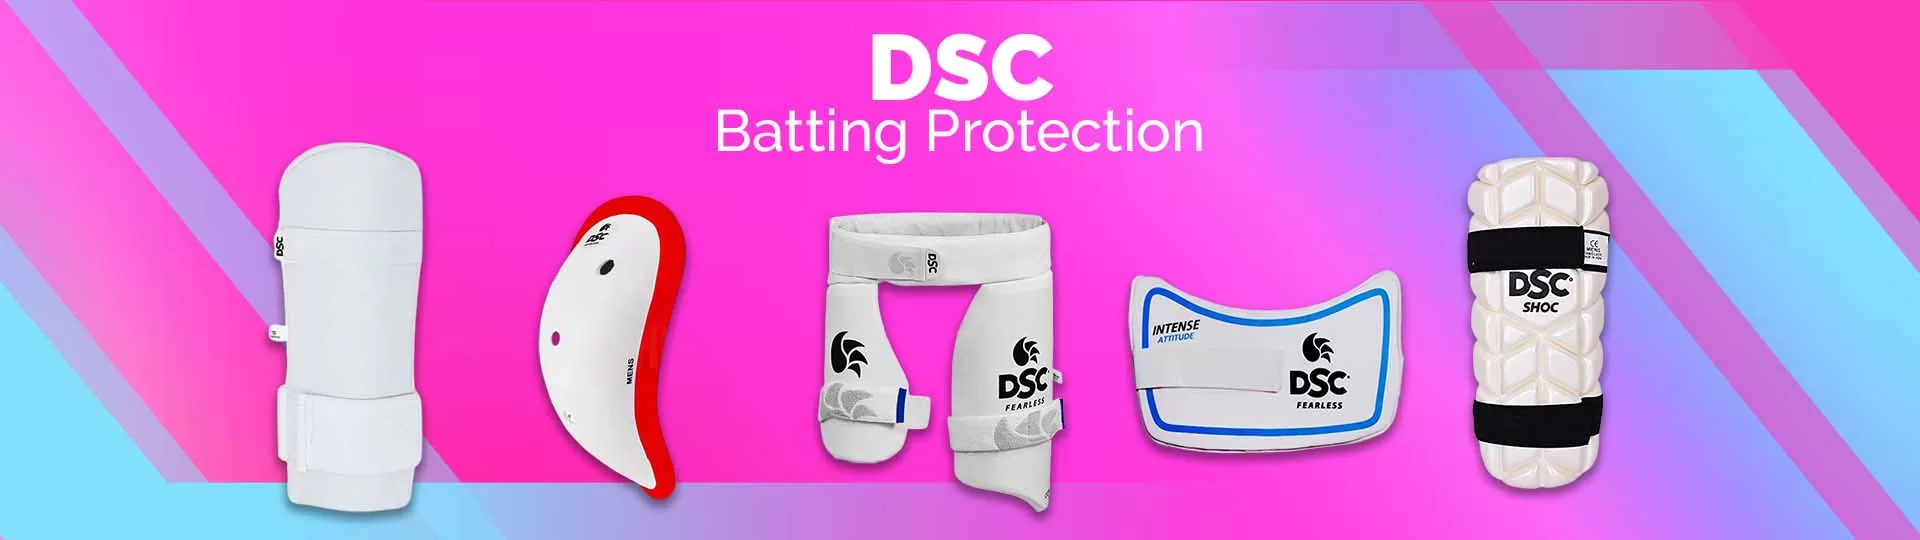 DSC Cricket Protection